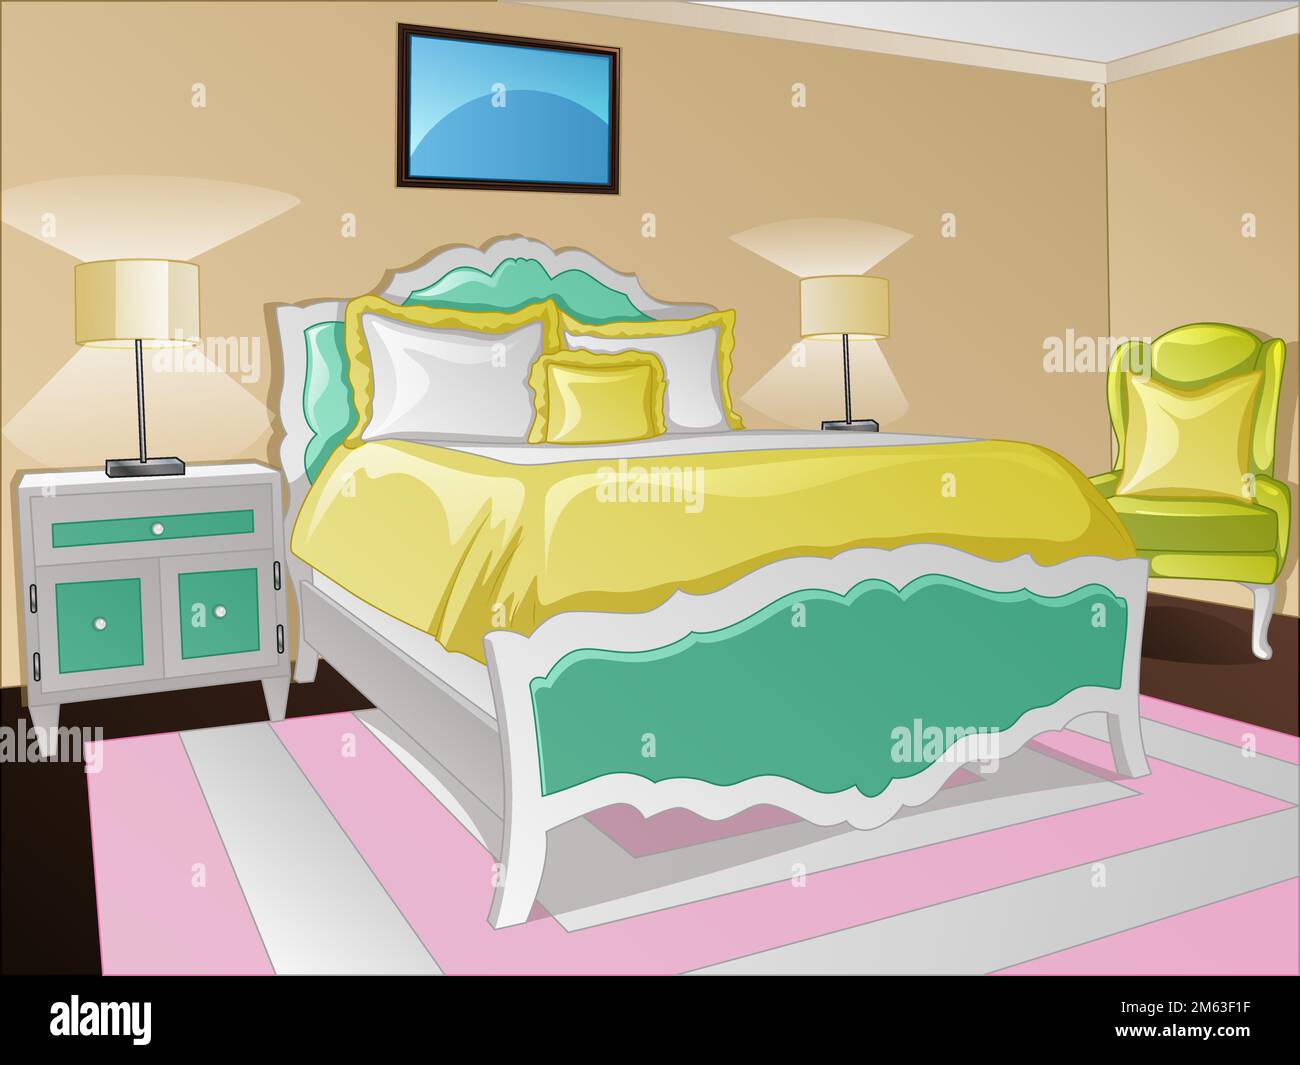 Farbenfrohe Cartoon-Schlafzimmer-Hintergrundszene. Vektordarstellung Stock Vektor